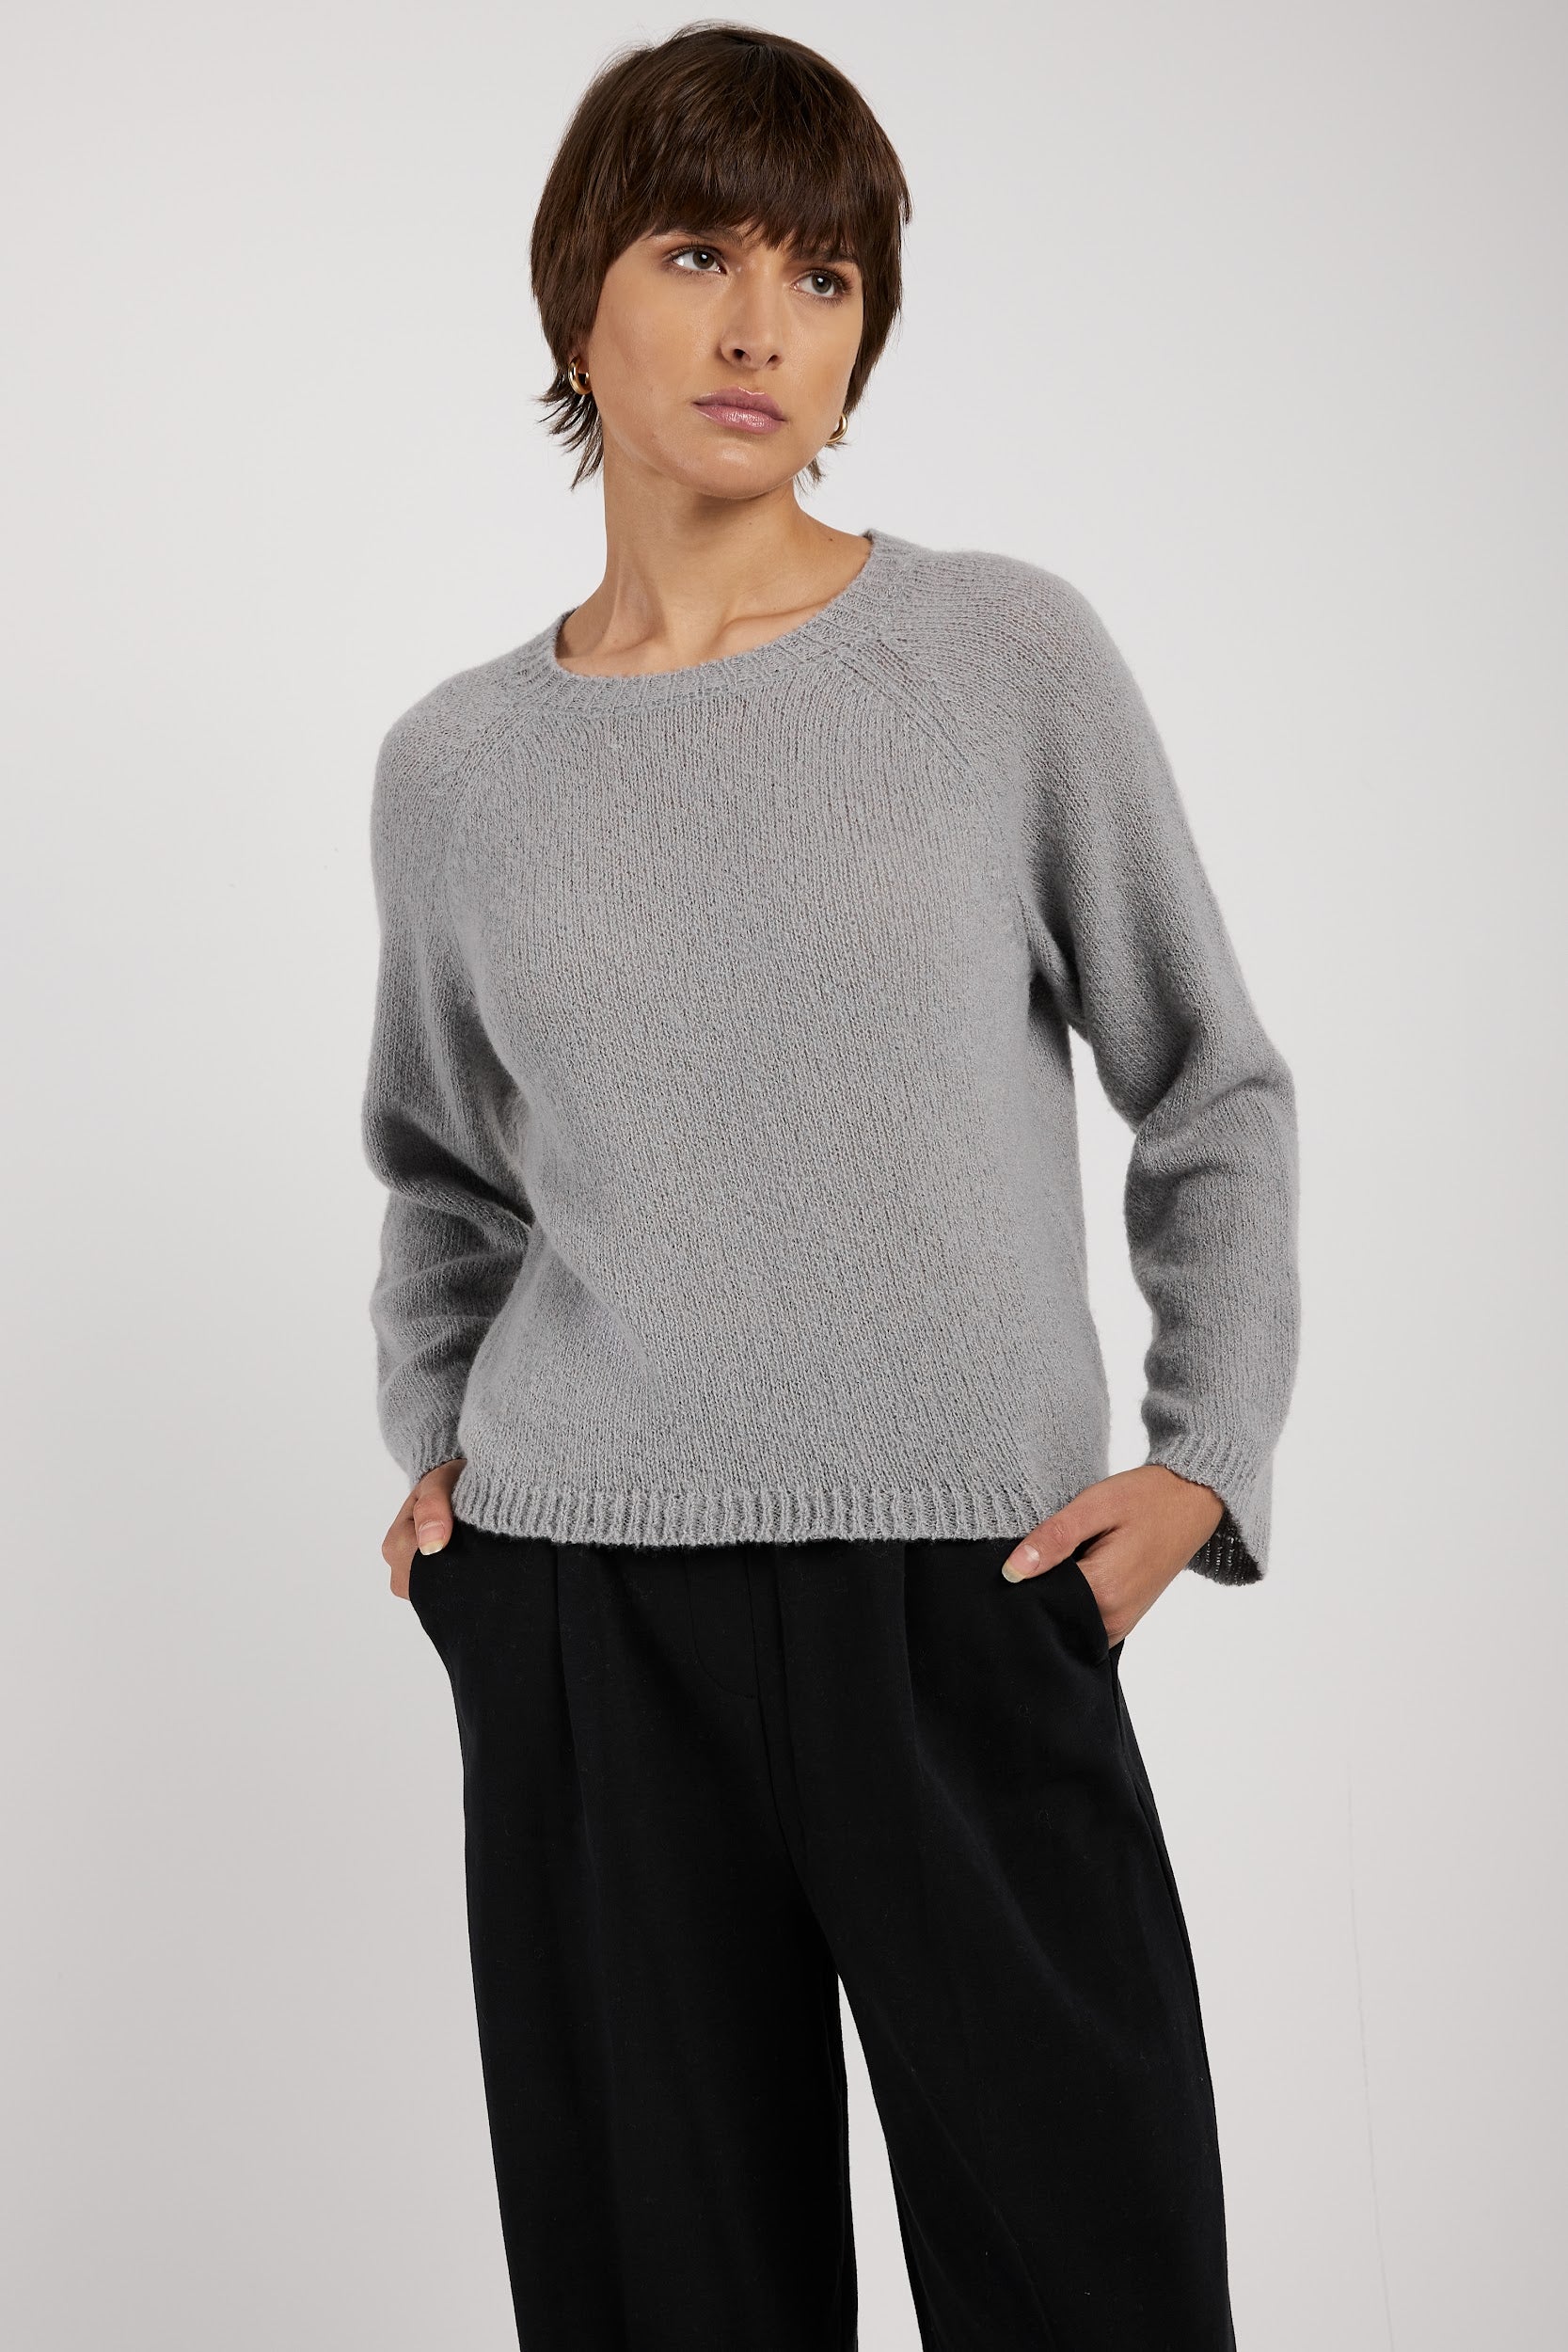 PRIVATE 0204 Bouclé Sweater in Heather Grey